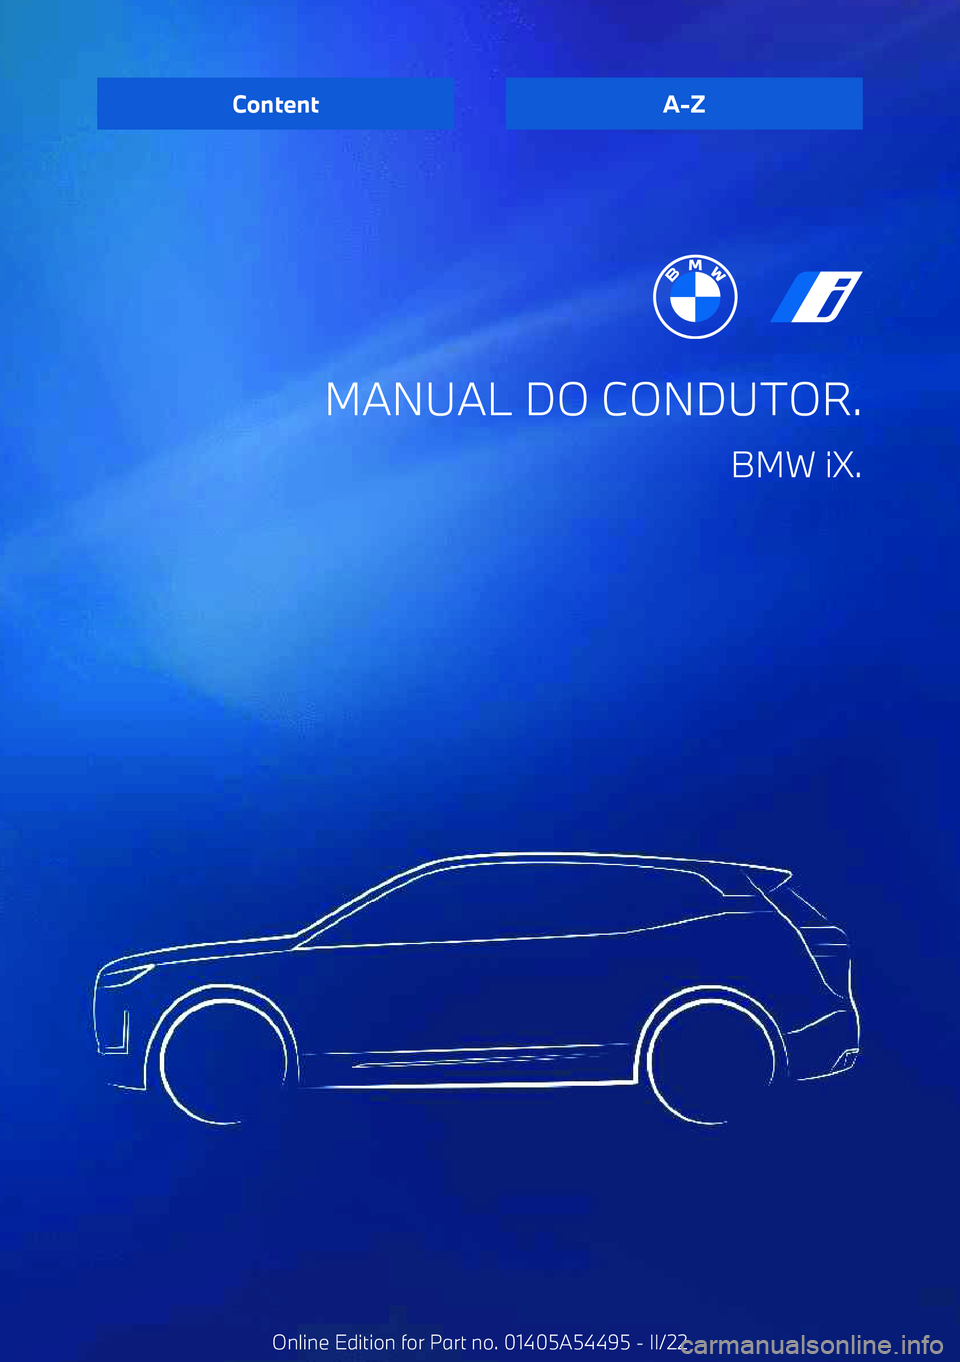 BMW IX 2022  Manual do condutor (in Portuguese) MANUAL DO CONDUTOR.BMW iX.ContentA